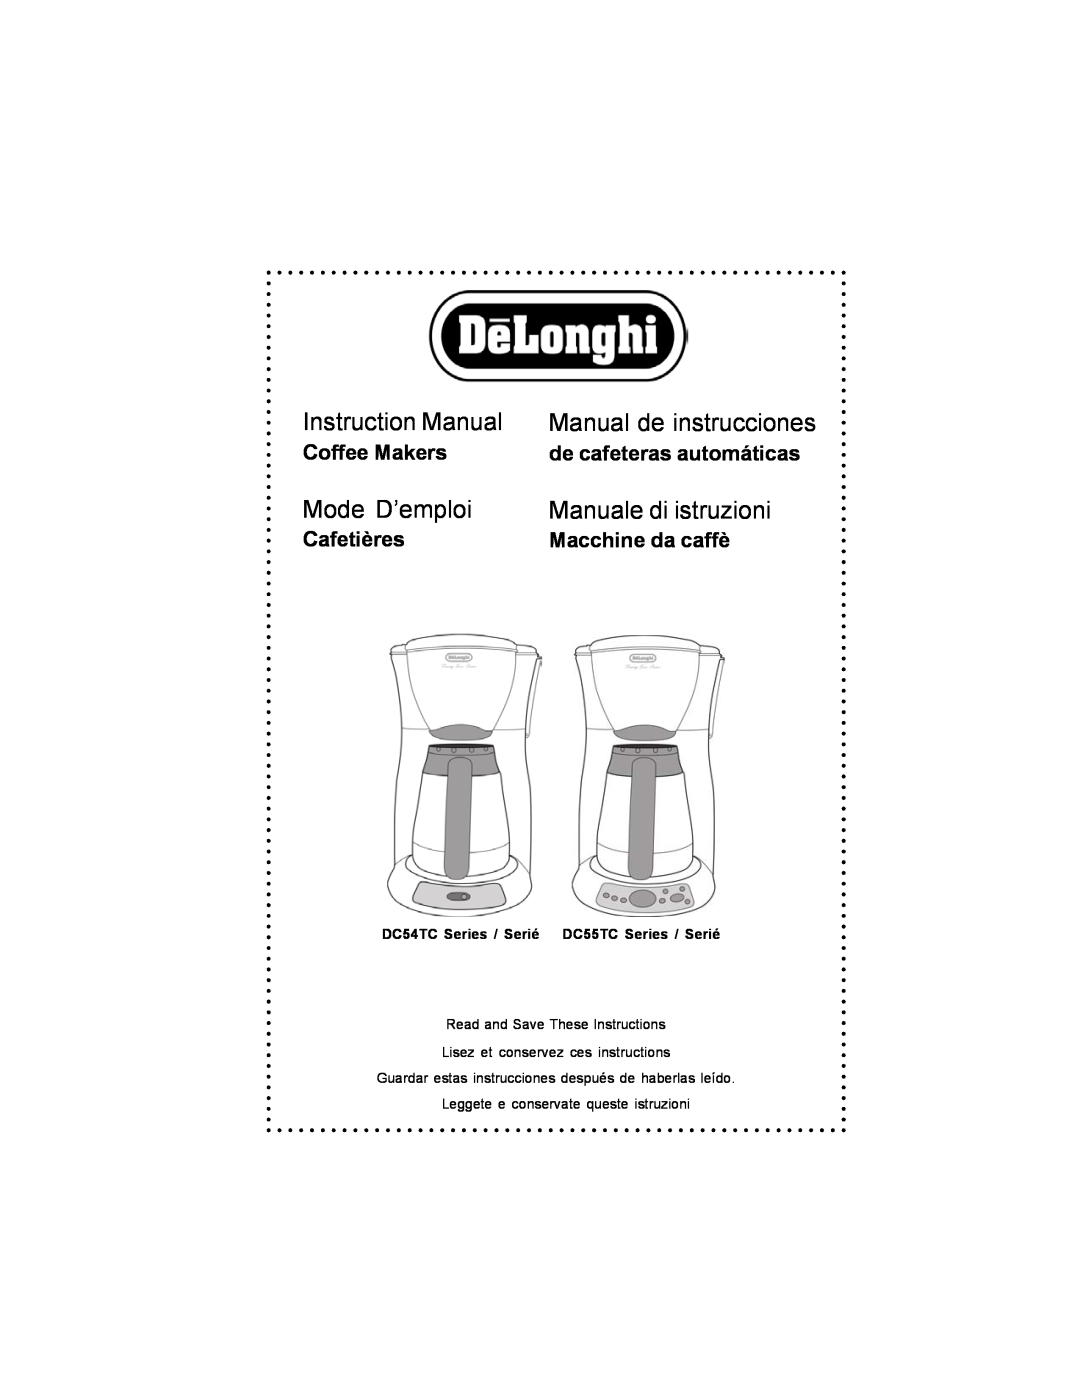 DeLonghi DC55TC instruction manual Coffee Makers, de cafeteras automáticas, Cafetières, Macchine da caffè, Mode D’emploi 